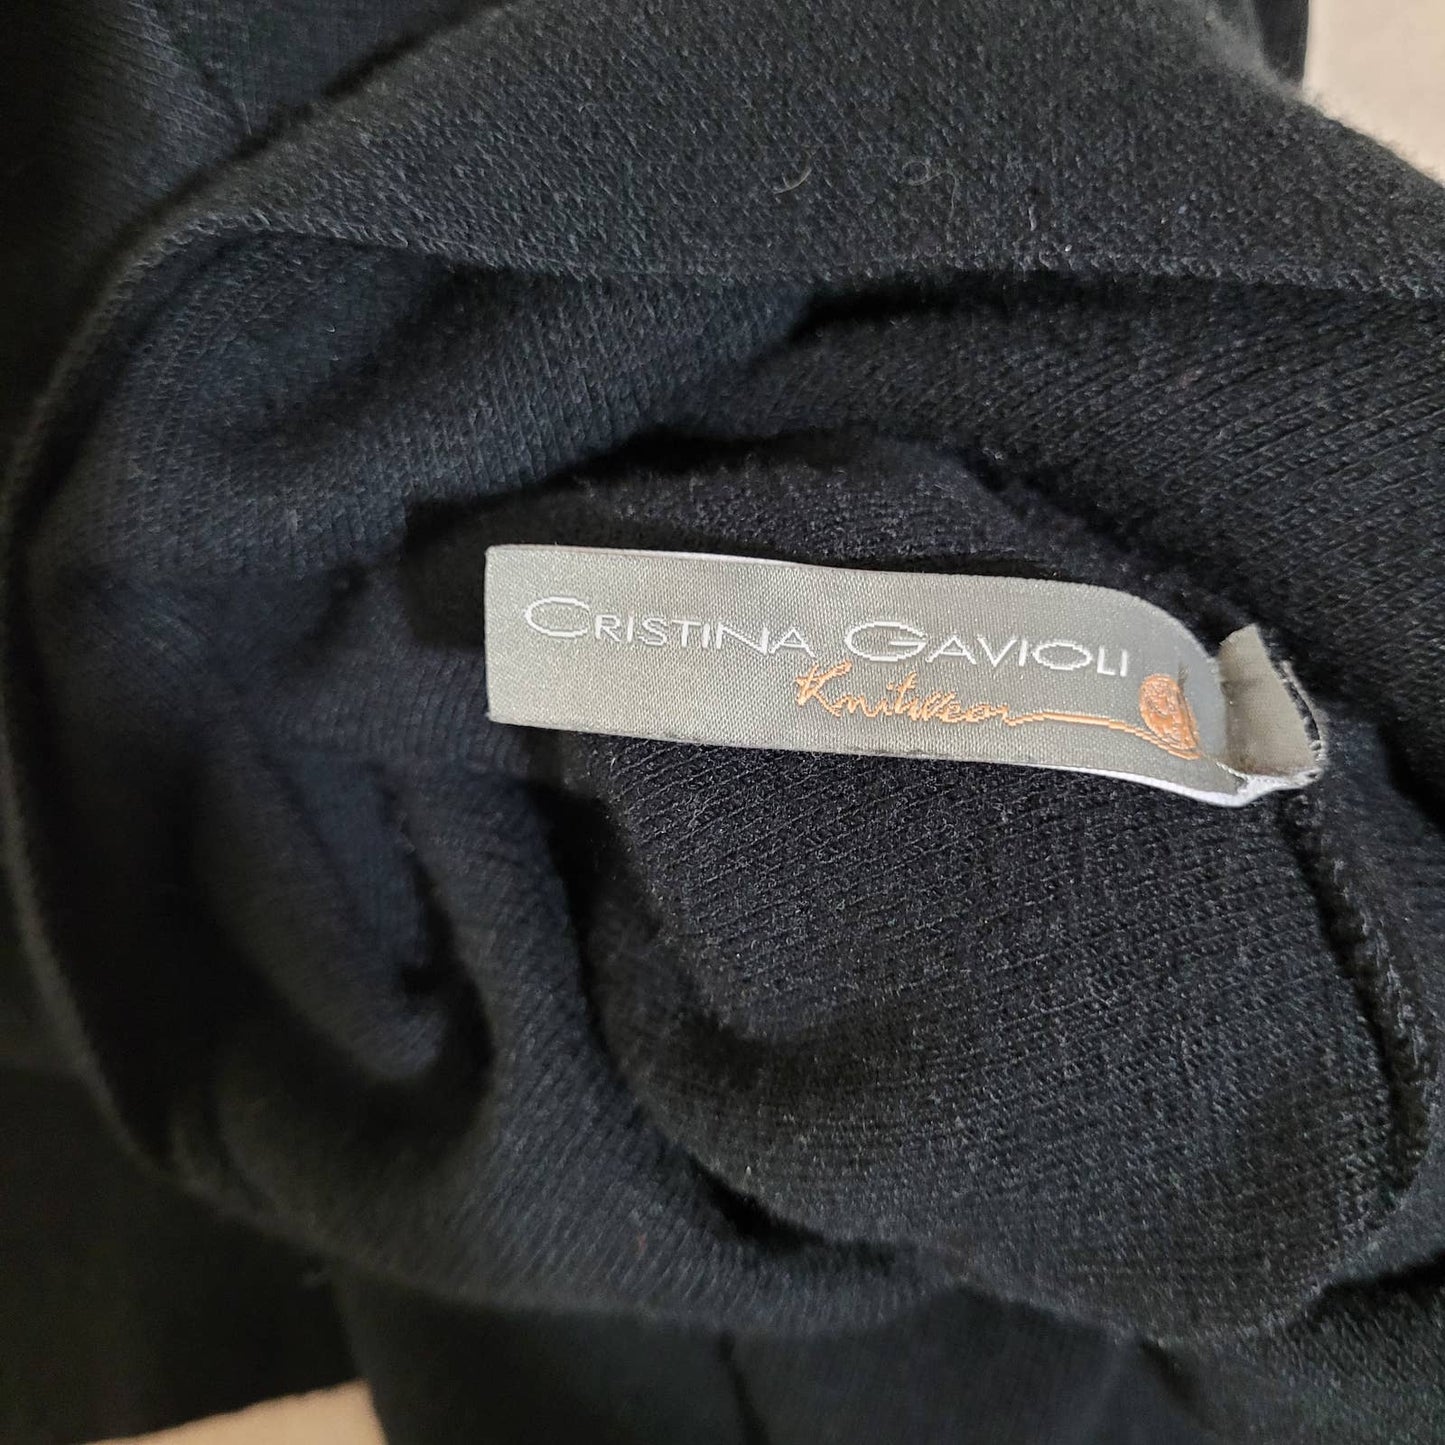 Cristina Gavioli Knitwear Black Hoody with Iron On Patches - Size MediumMarkita's ClosetCristina Gavioli